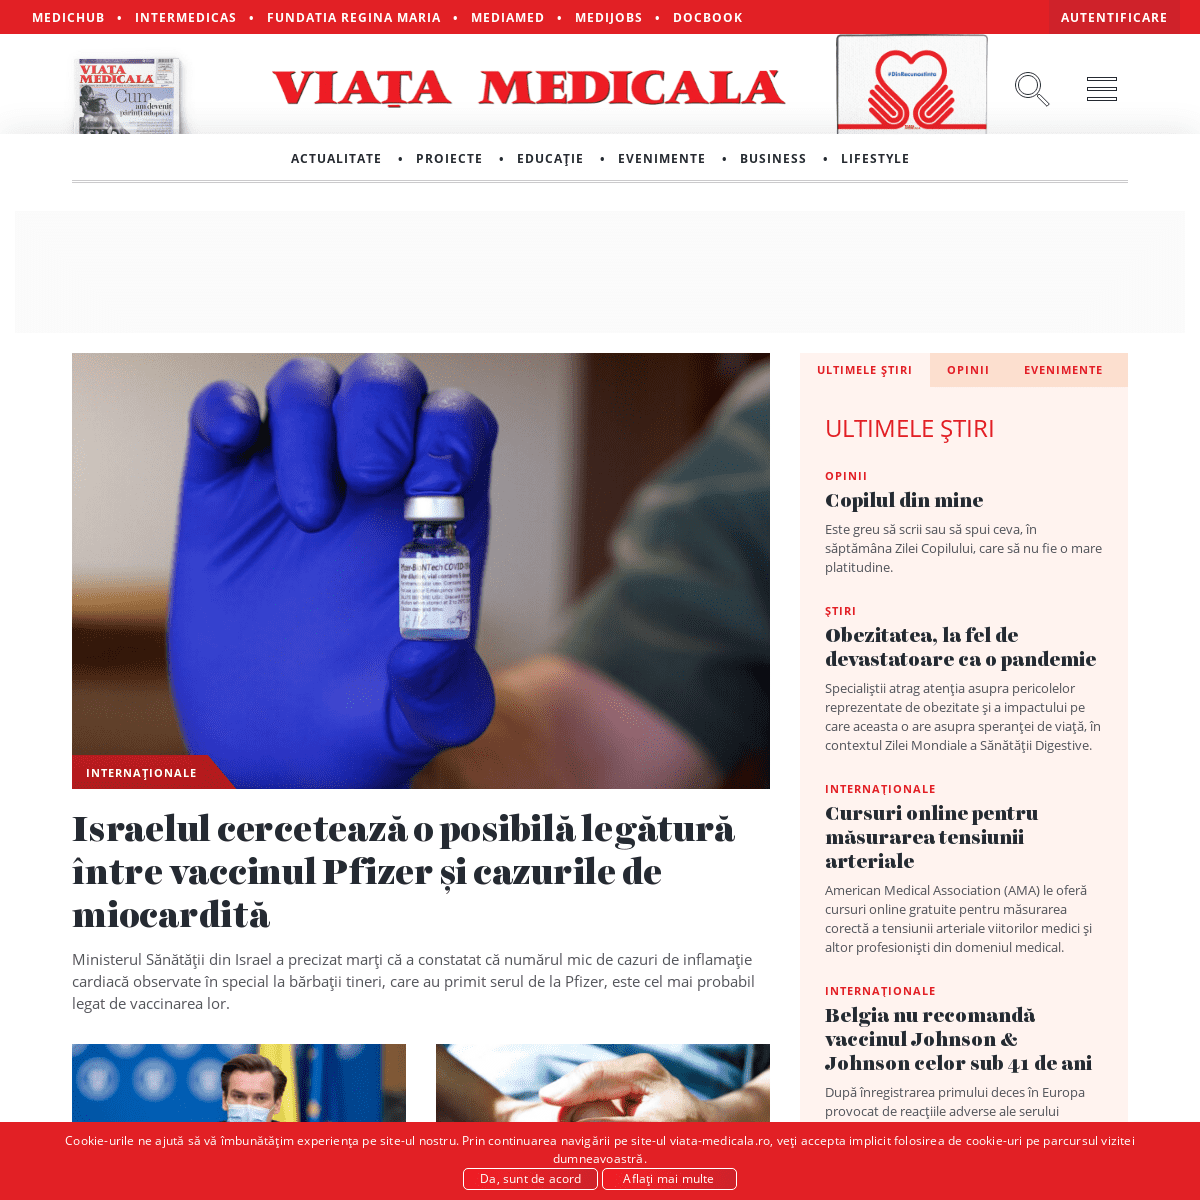 A complete backup of https://viata-medicala.ro